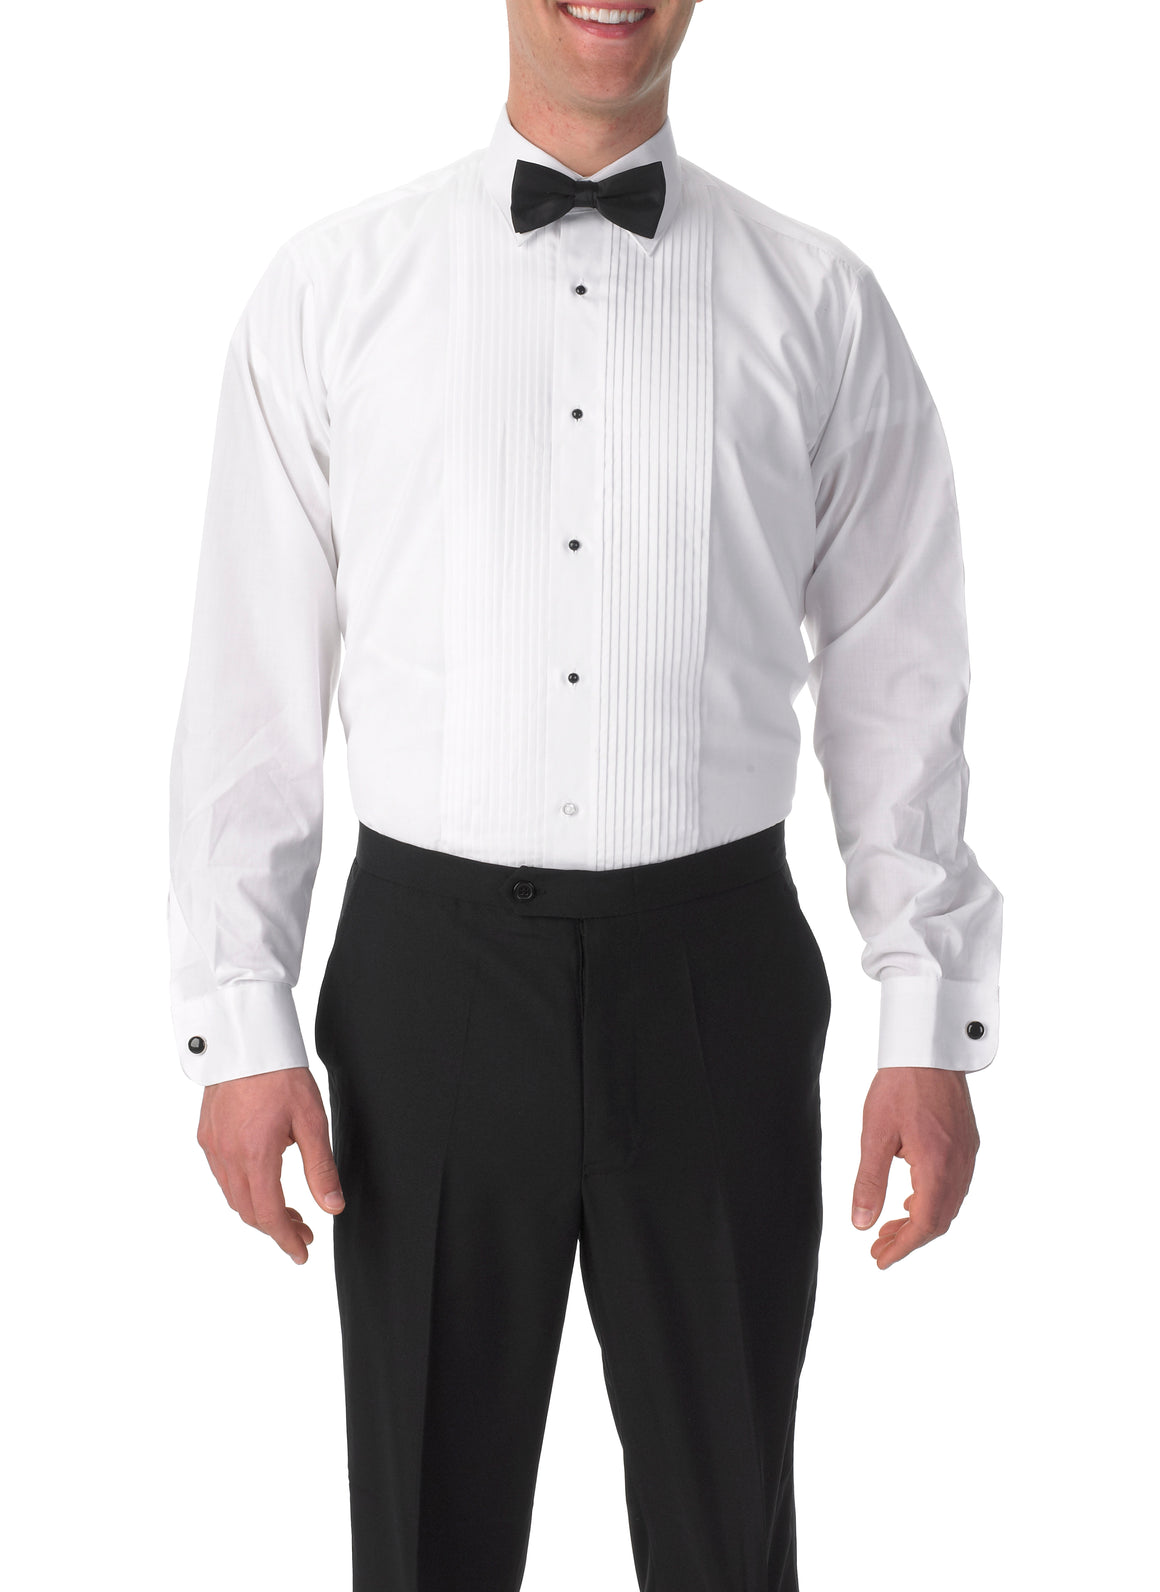 Men's White, Lay Down Collar, Long Sleeve Tuxedo Shirt with ¼″ Pleats